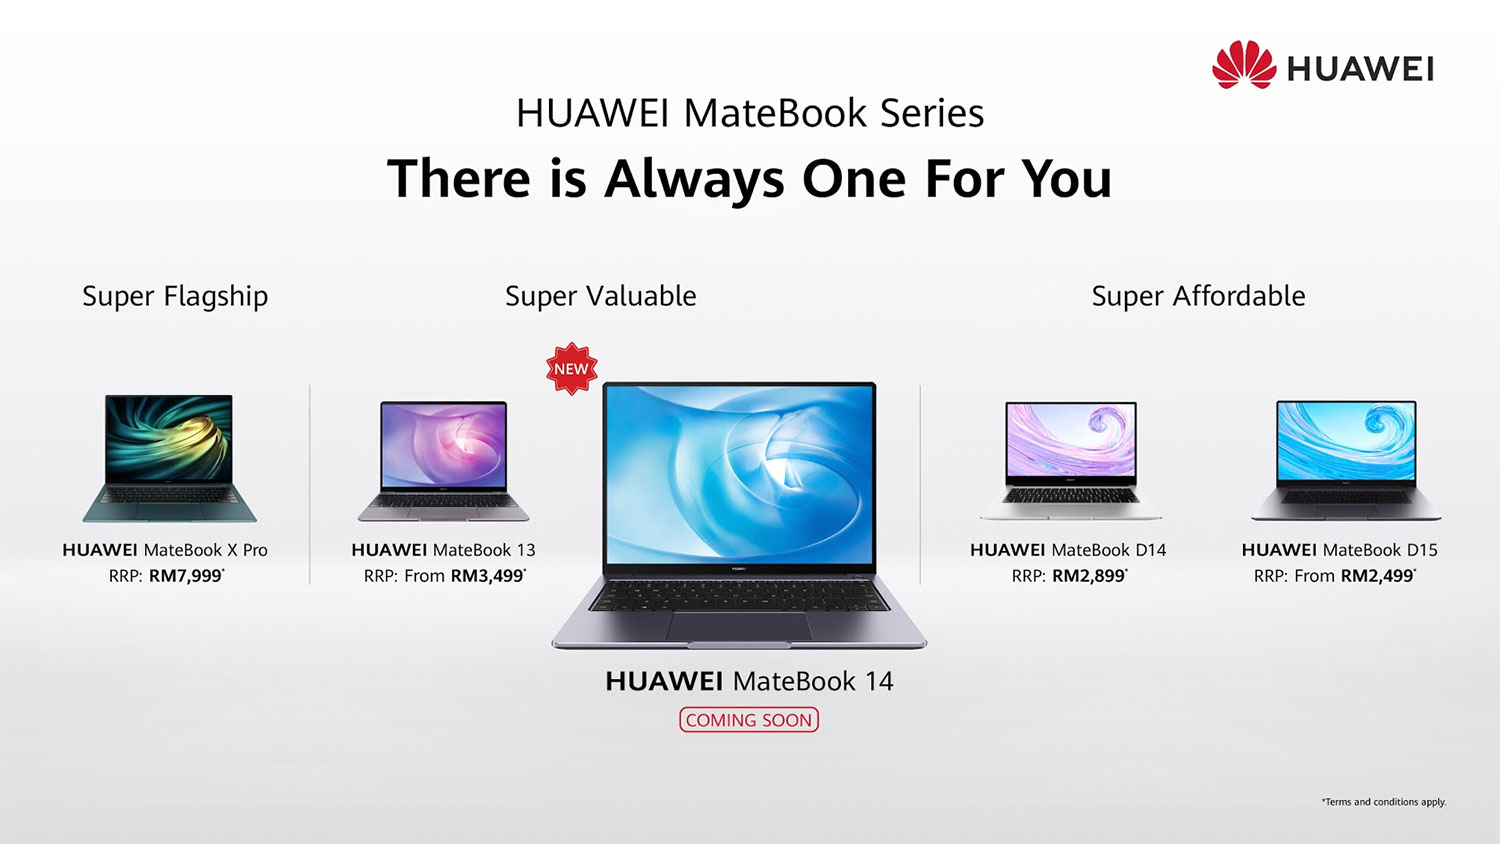 HUAWEI MateBook 14 Coming Soon